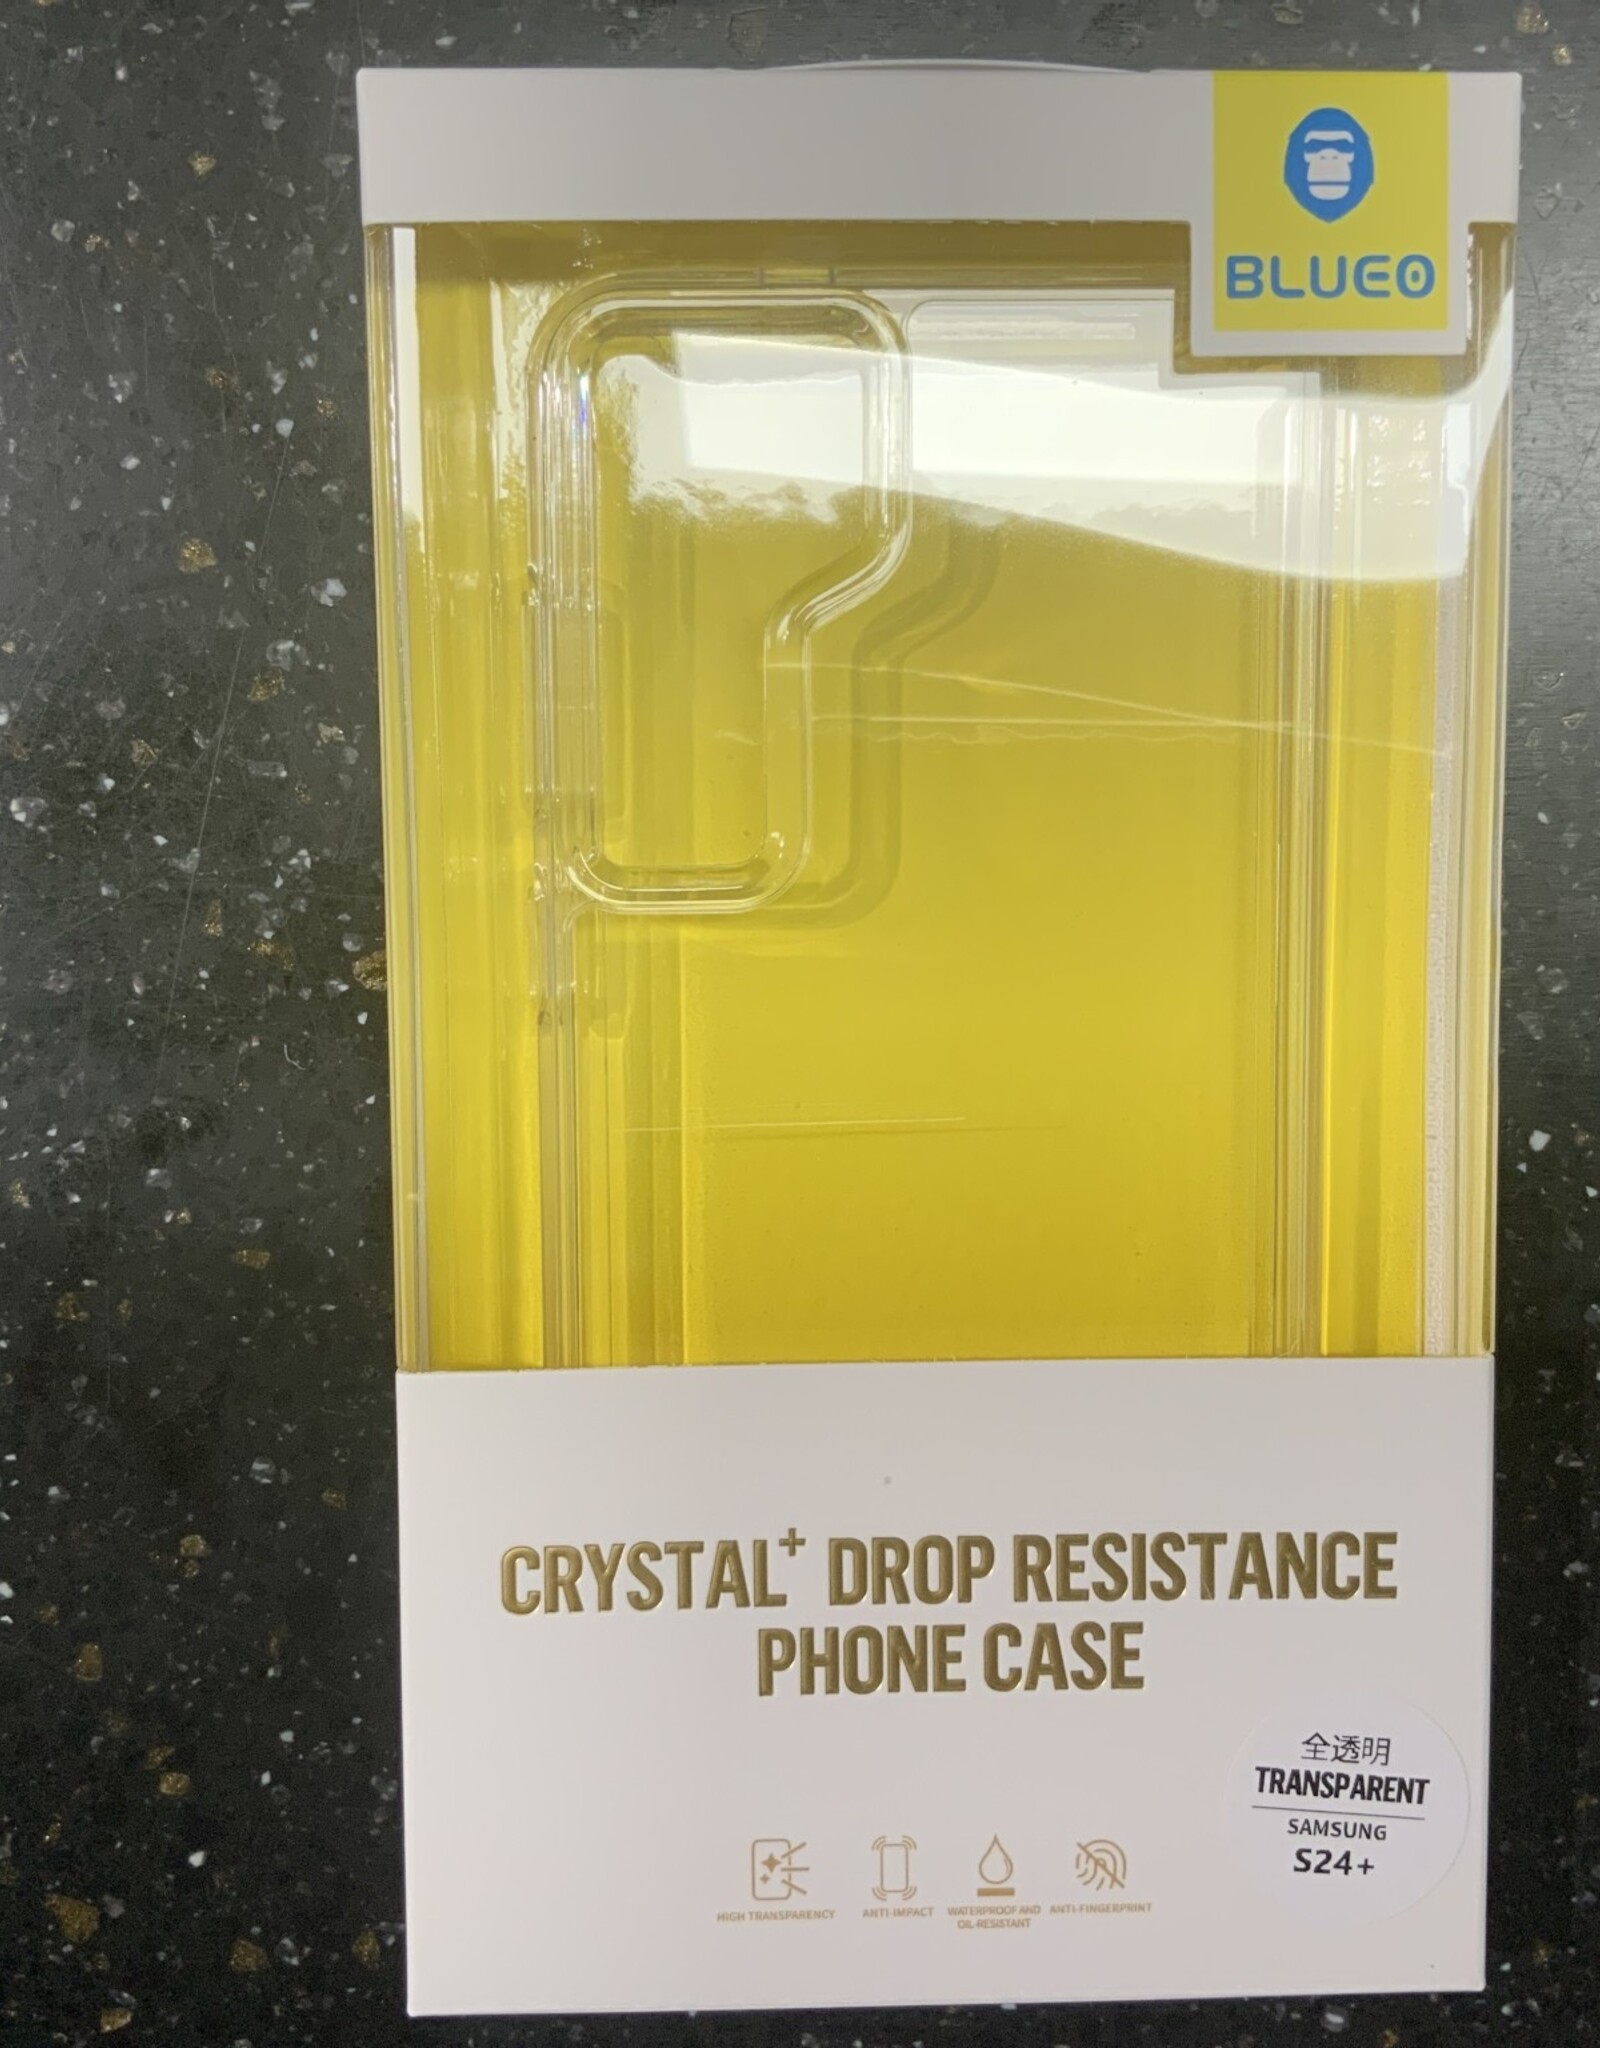 Blueo Crystal + Resistance Phone Case Transparent Samsung S24 plus